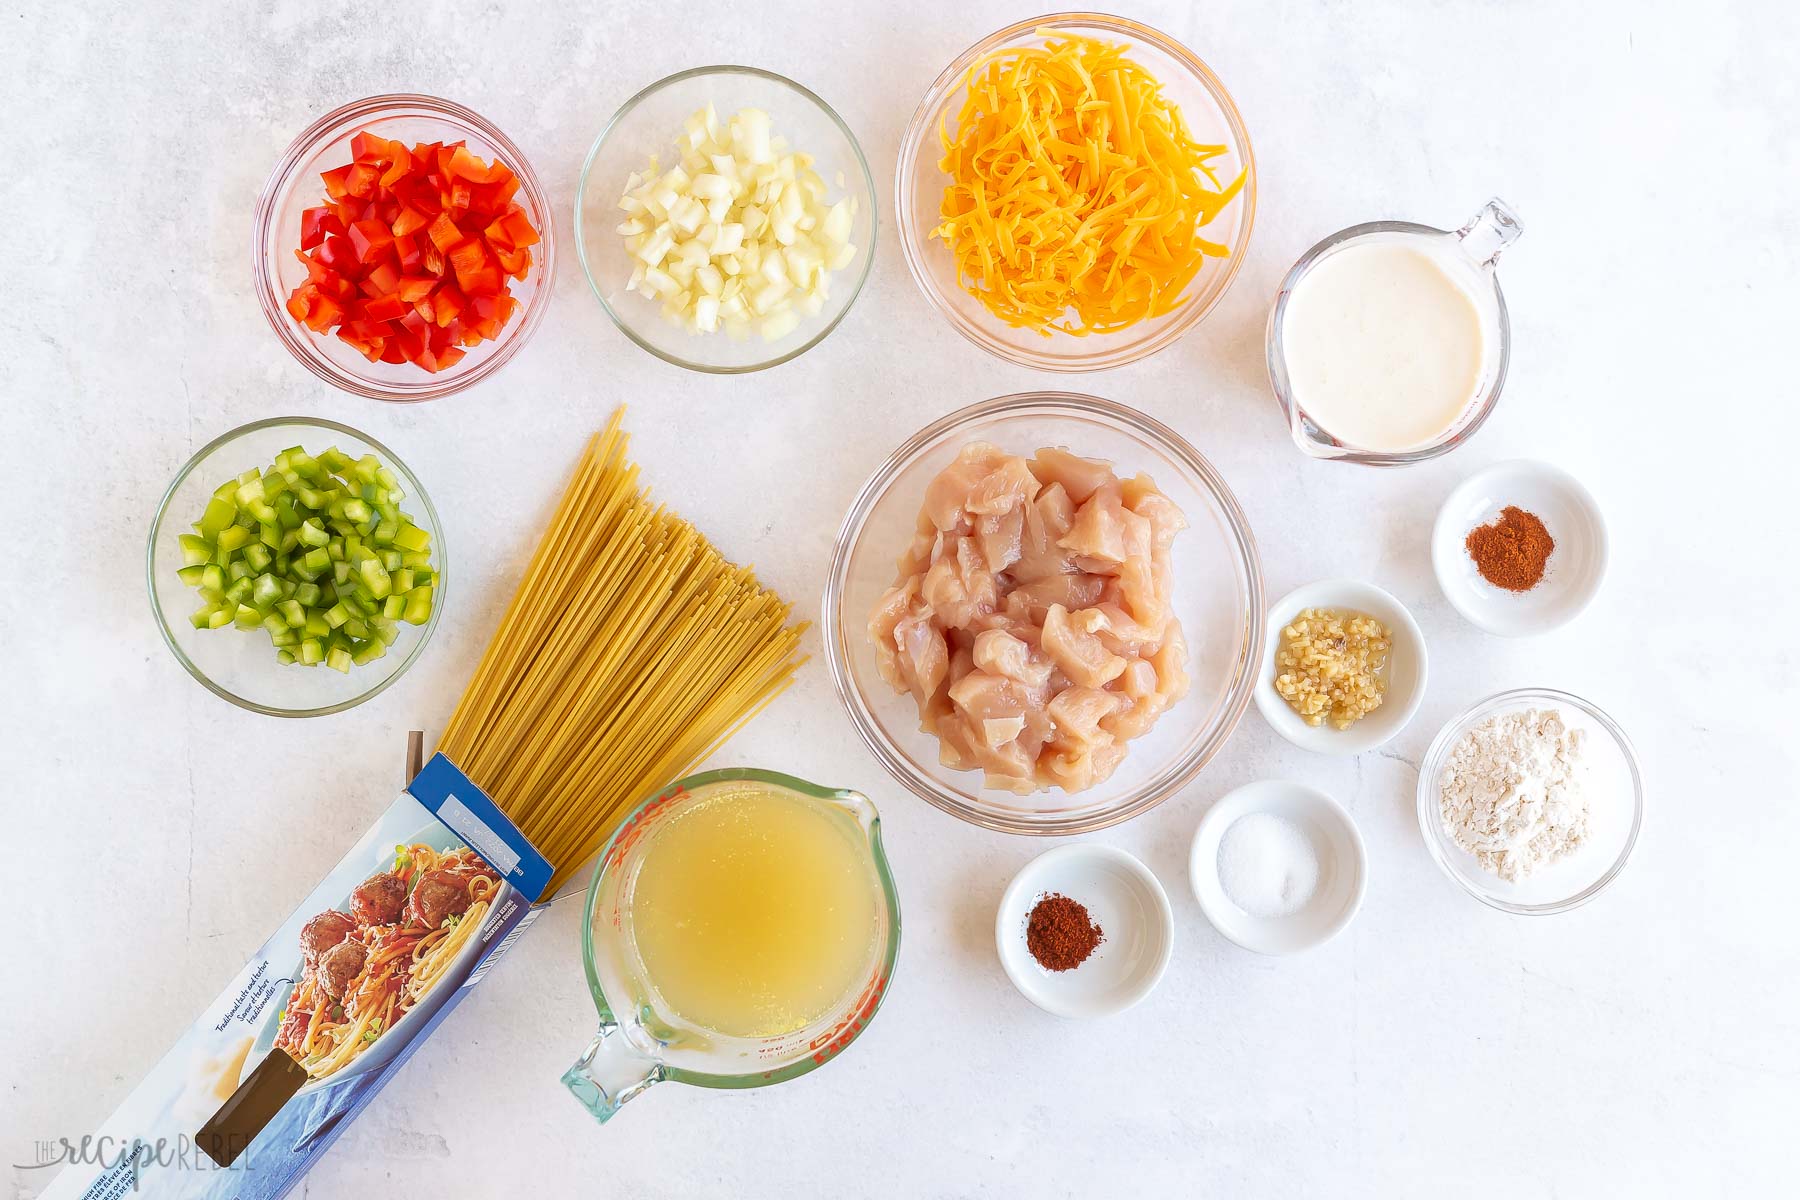 ingredients needed to make chicken spaghetti on white background.